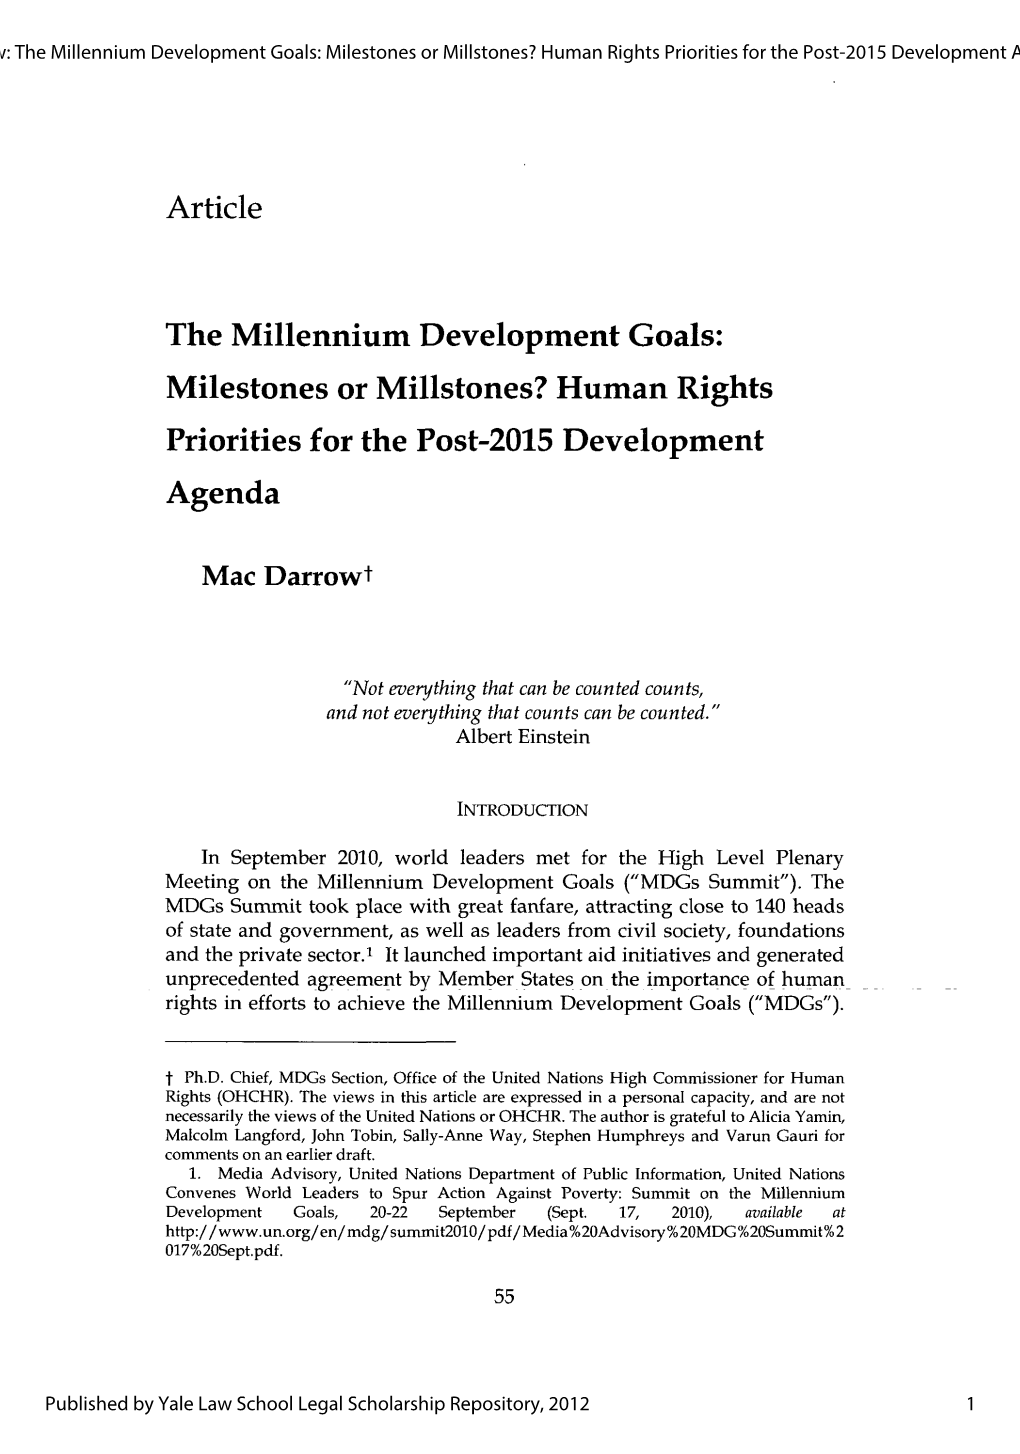 The Millennium Development Goals: Milestones Or Millstones? Human Rights Priorities for the Post-2015 Development Agenda